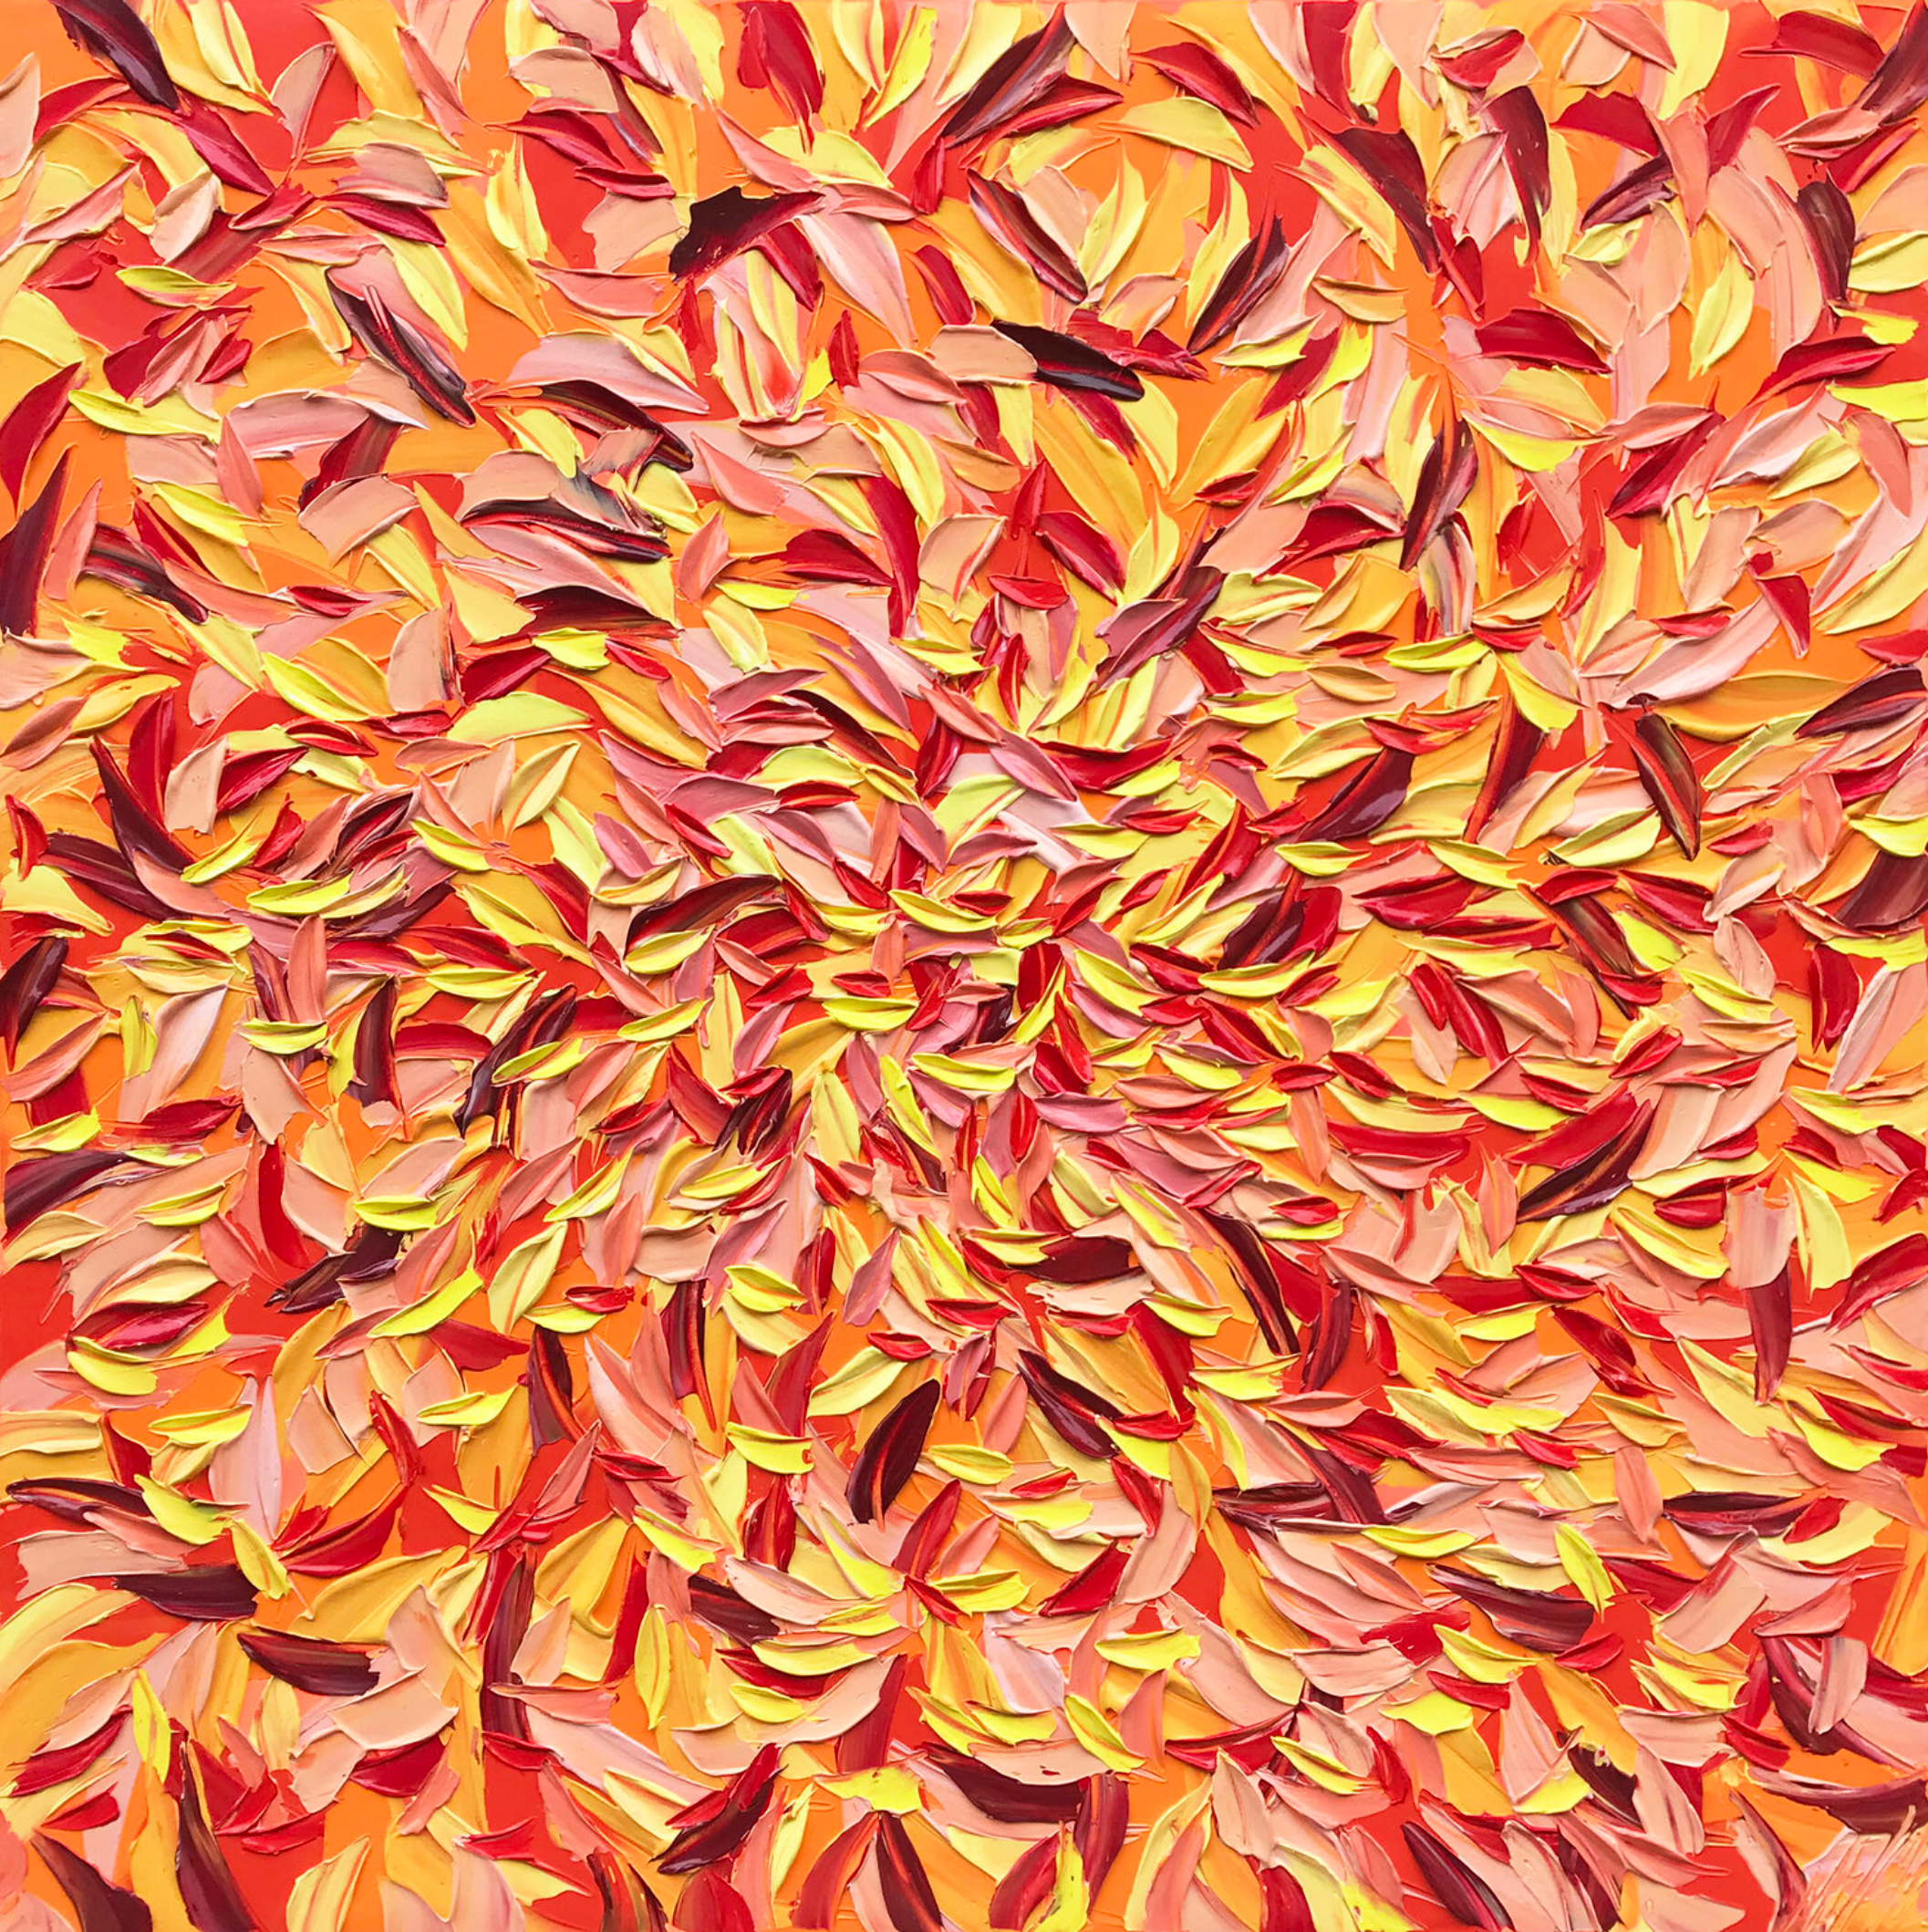 Oliver Messas "À la folie..." Pittura astratta di foglie colorate